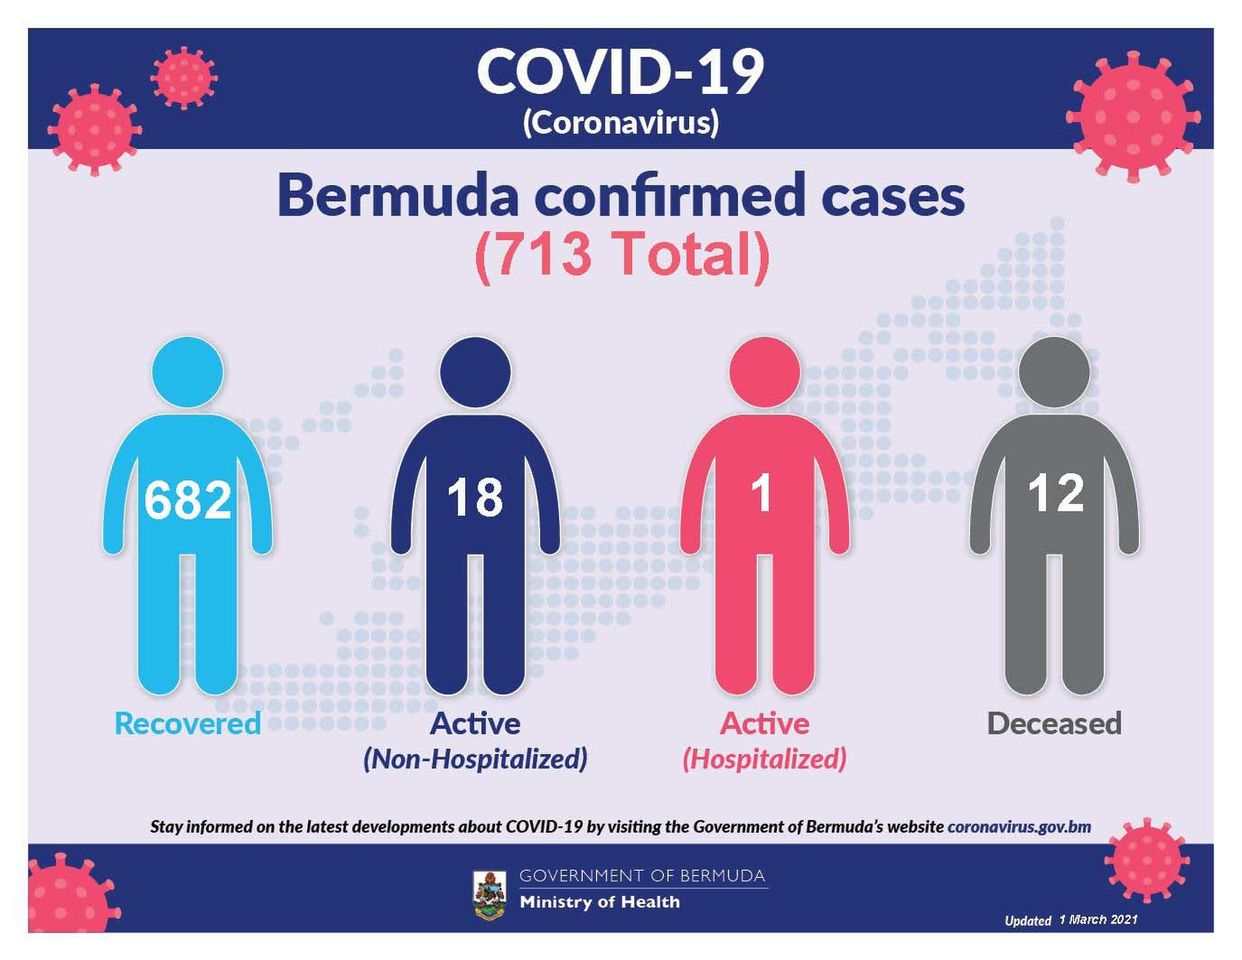 6 new COVID-19 cases reported in Bermuda, 1 March 2021